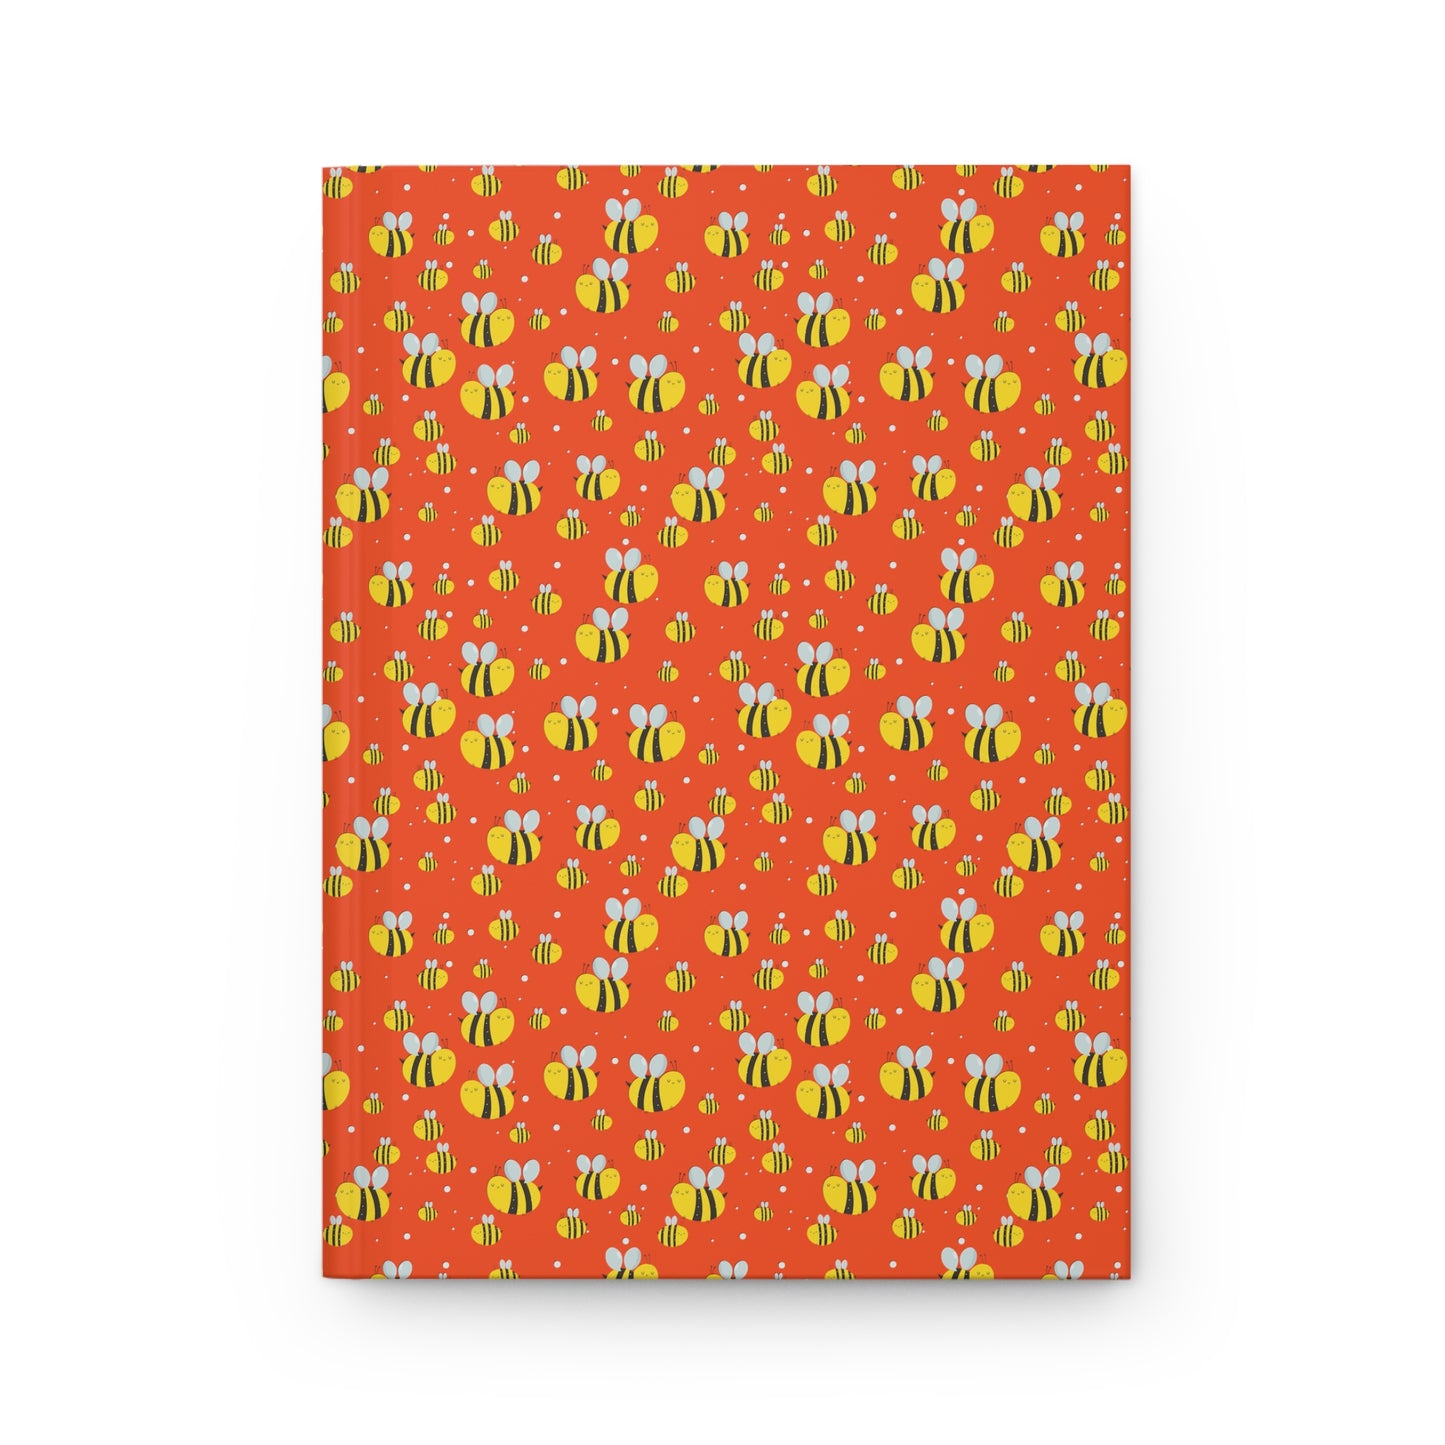 Lots of Bees - Orange fc4f15 - Hardcover Journal Matte